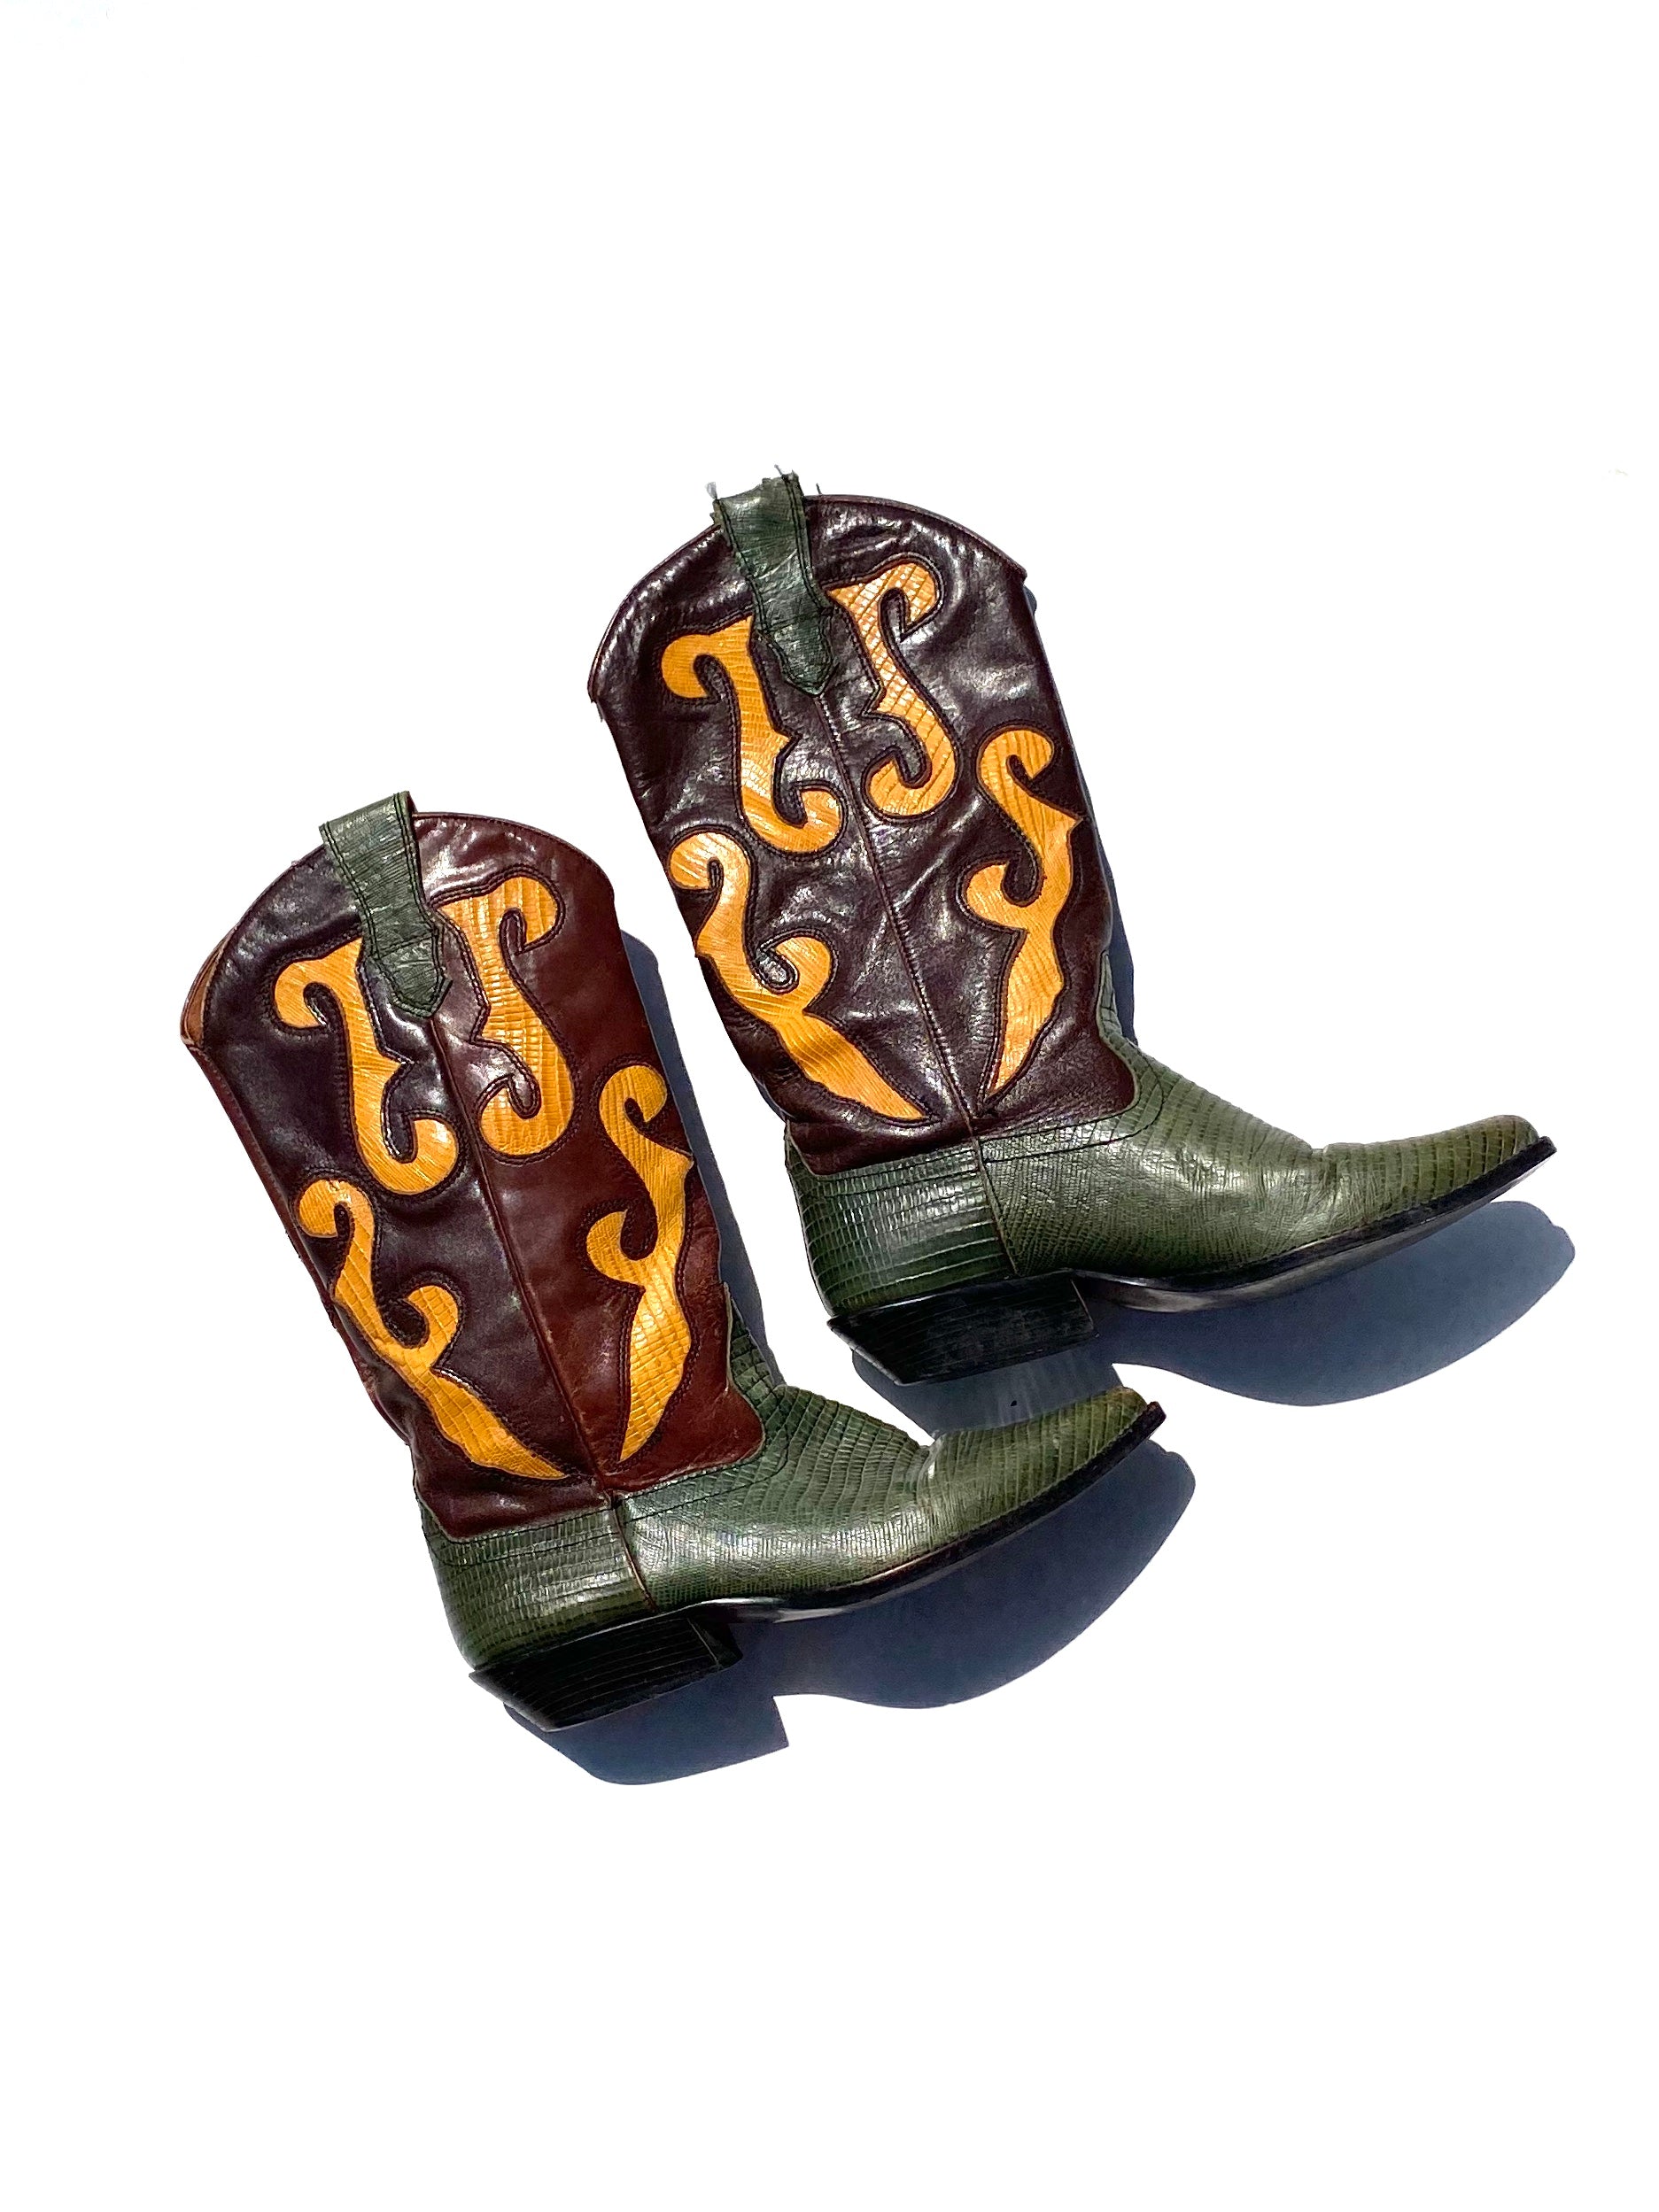 Vintage Western Boots - Green Snakeskin